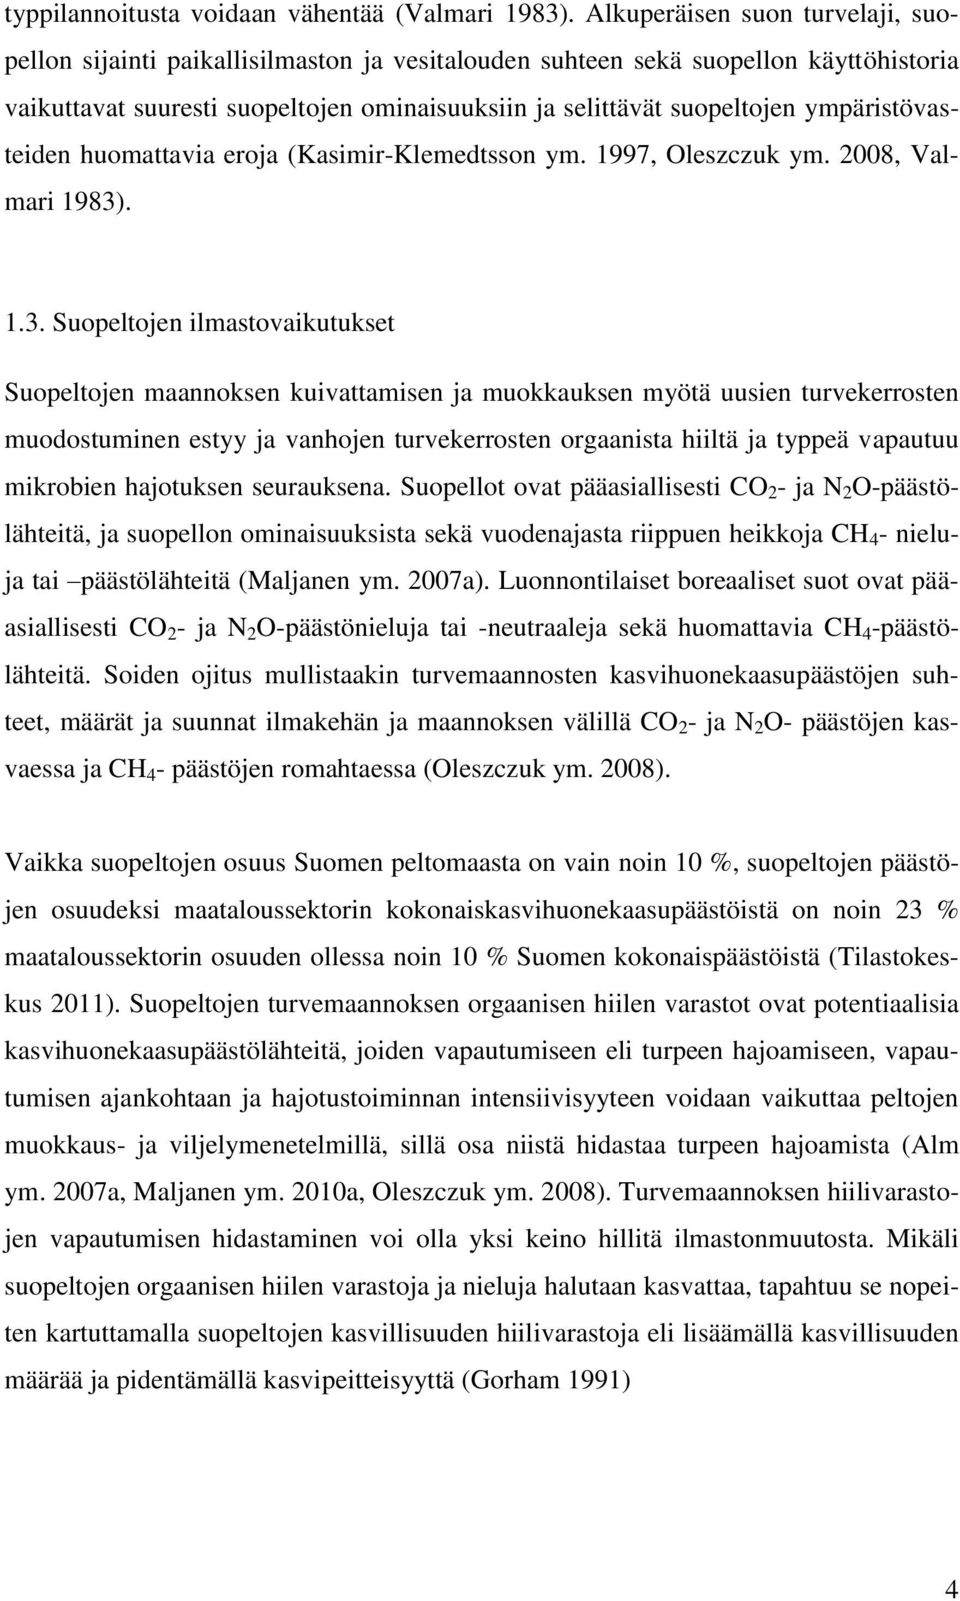 ympäristövasteiden huomattavia eroja (Kasimir-Klemedtsson ym. 1997, Oleszczuk ym. 2008, Valmari 1983)